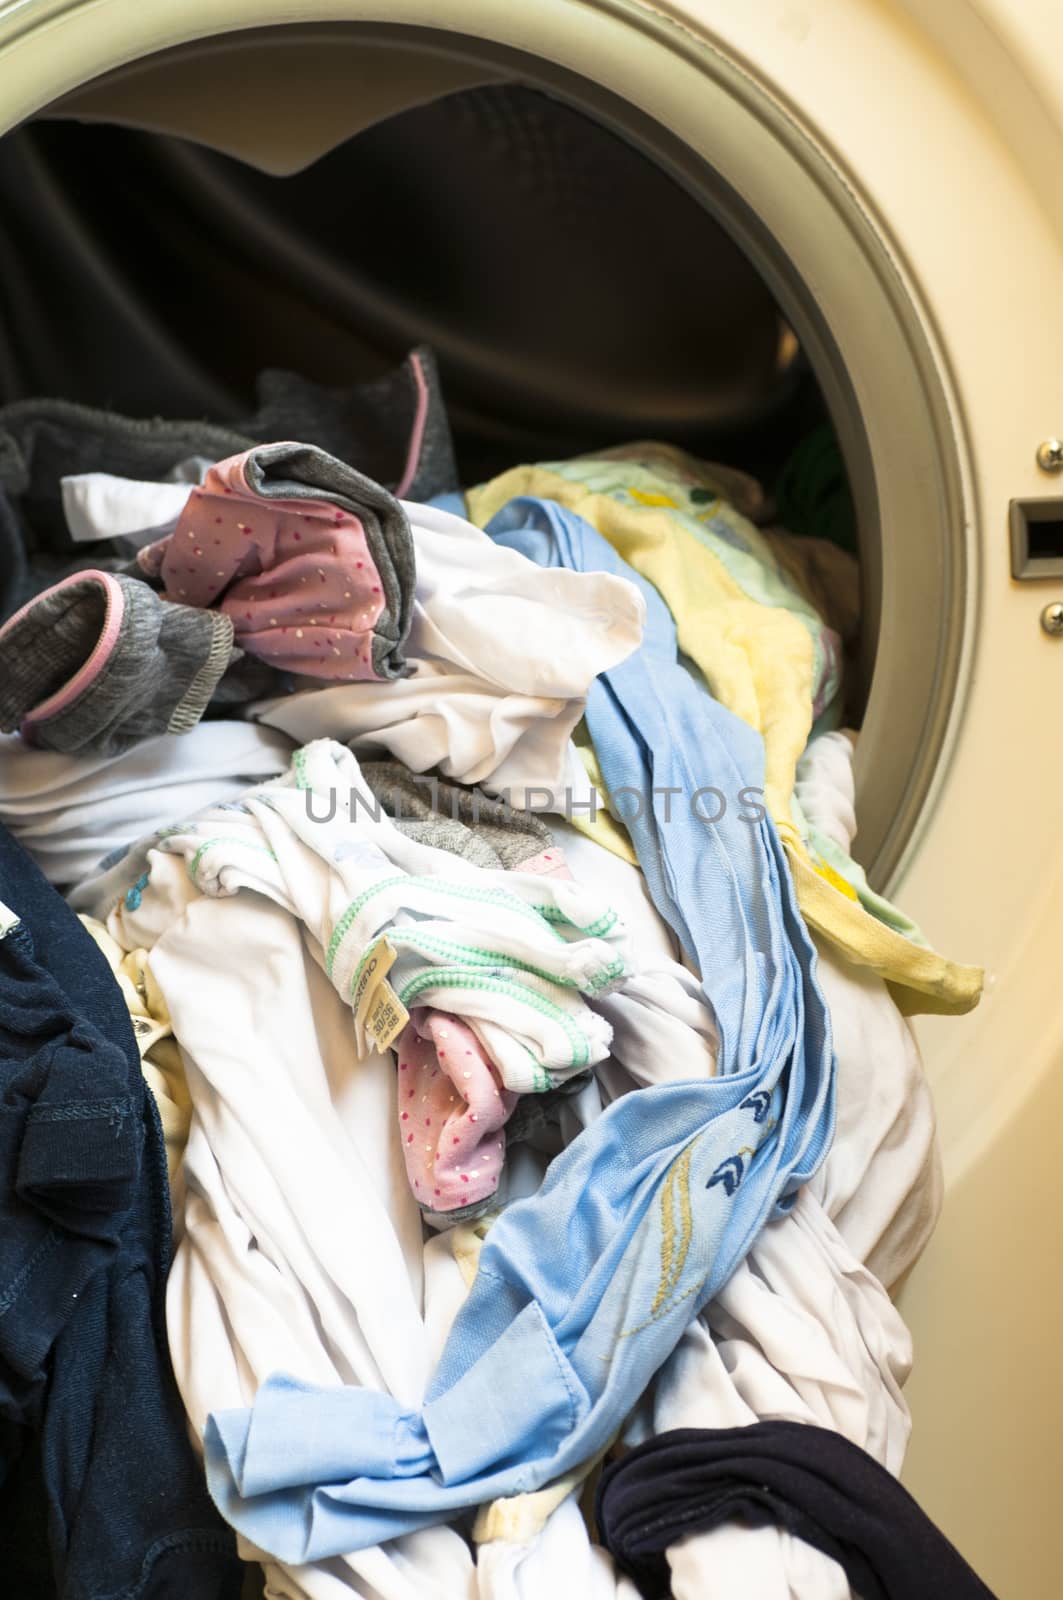 laundry in the washing machine by antonio.li